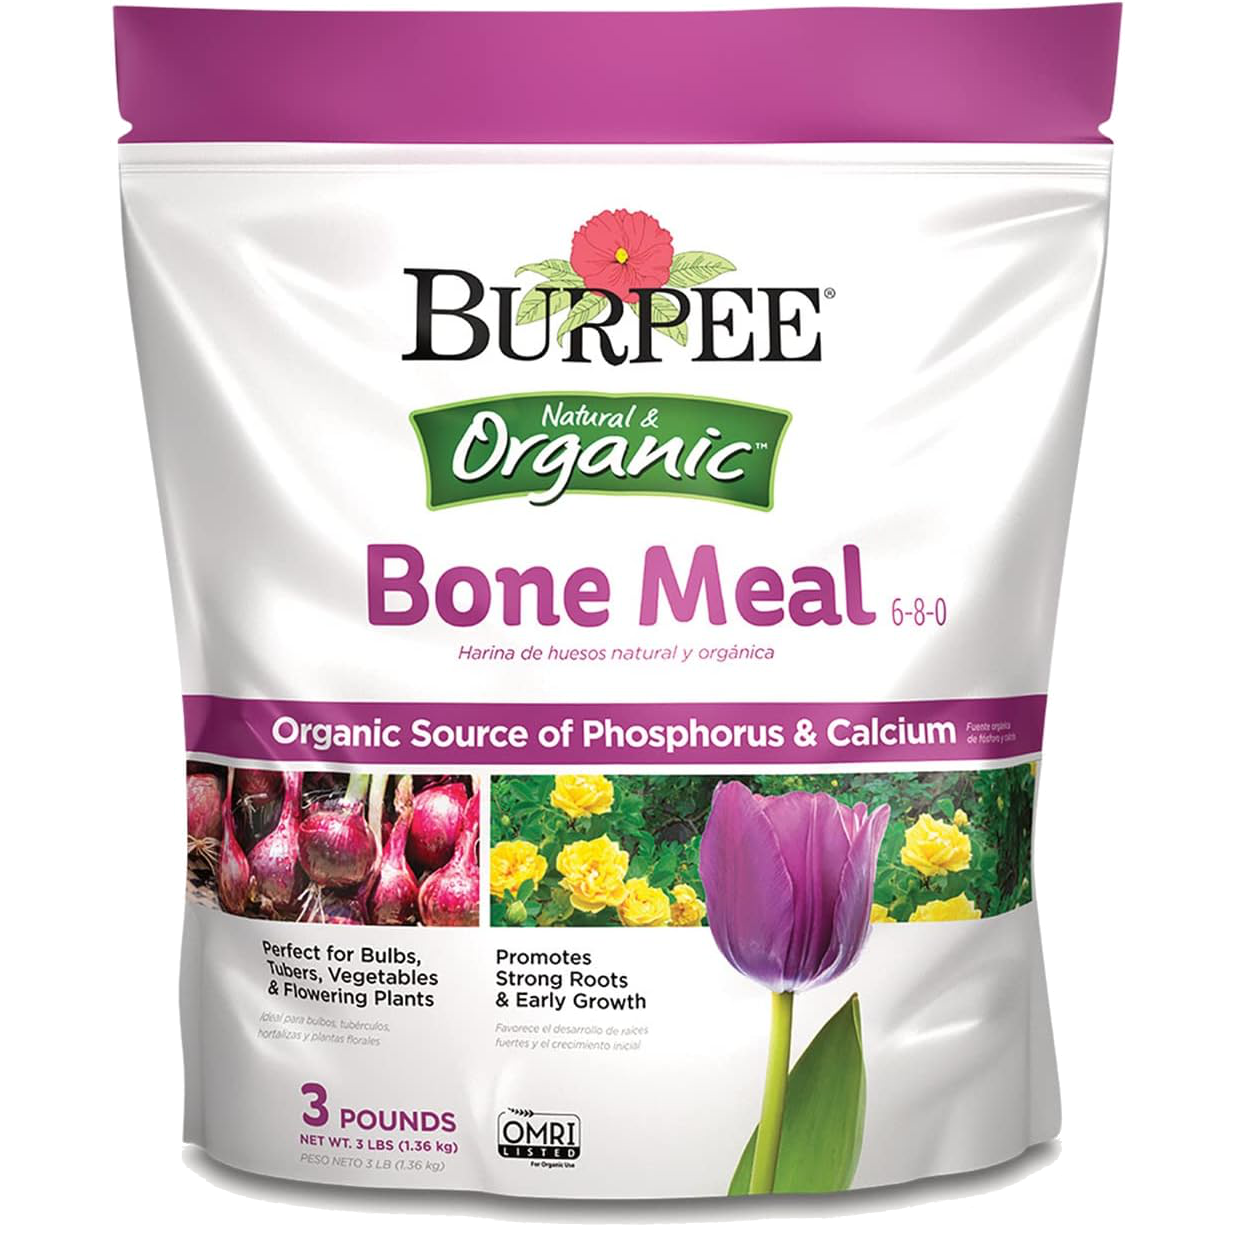 burpee-organic-bone-meal-render-01